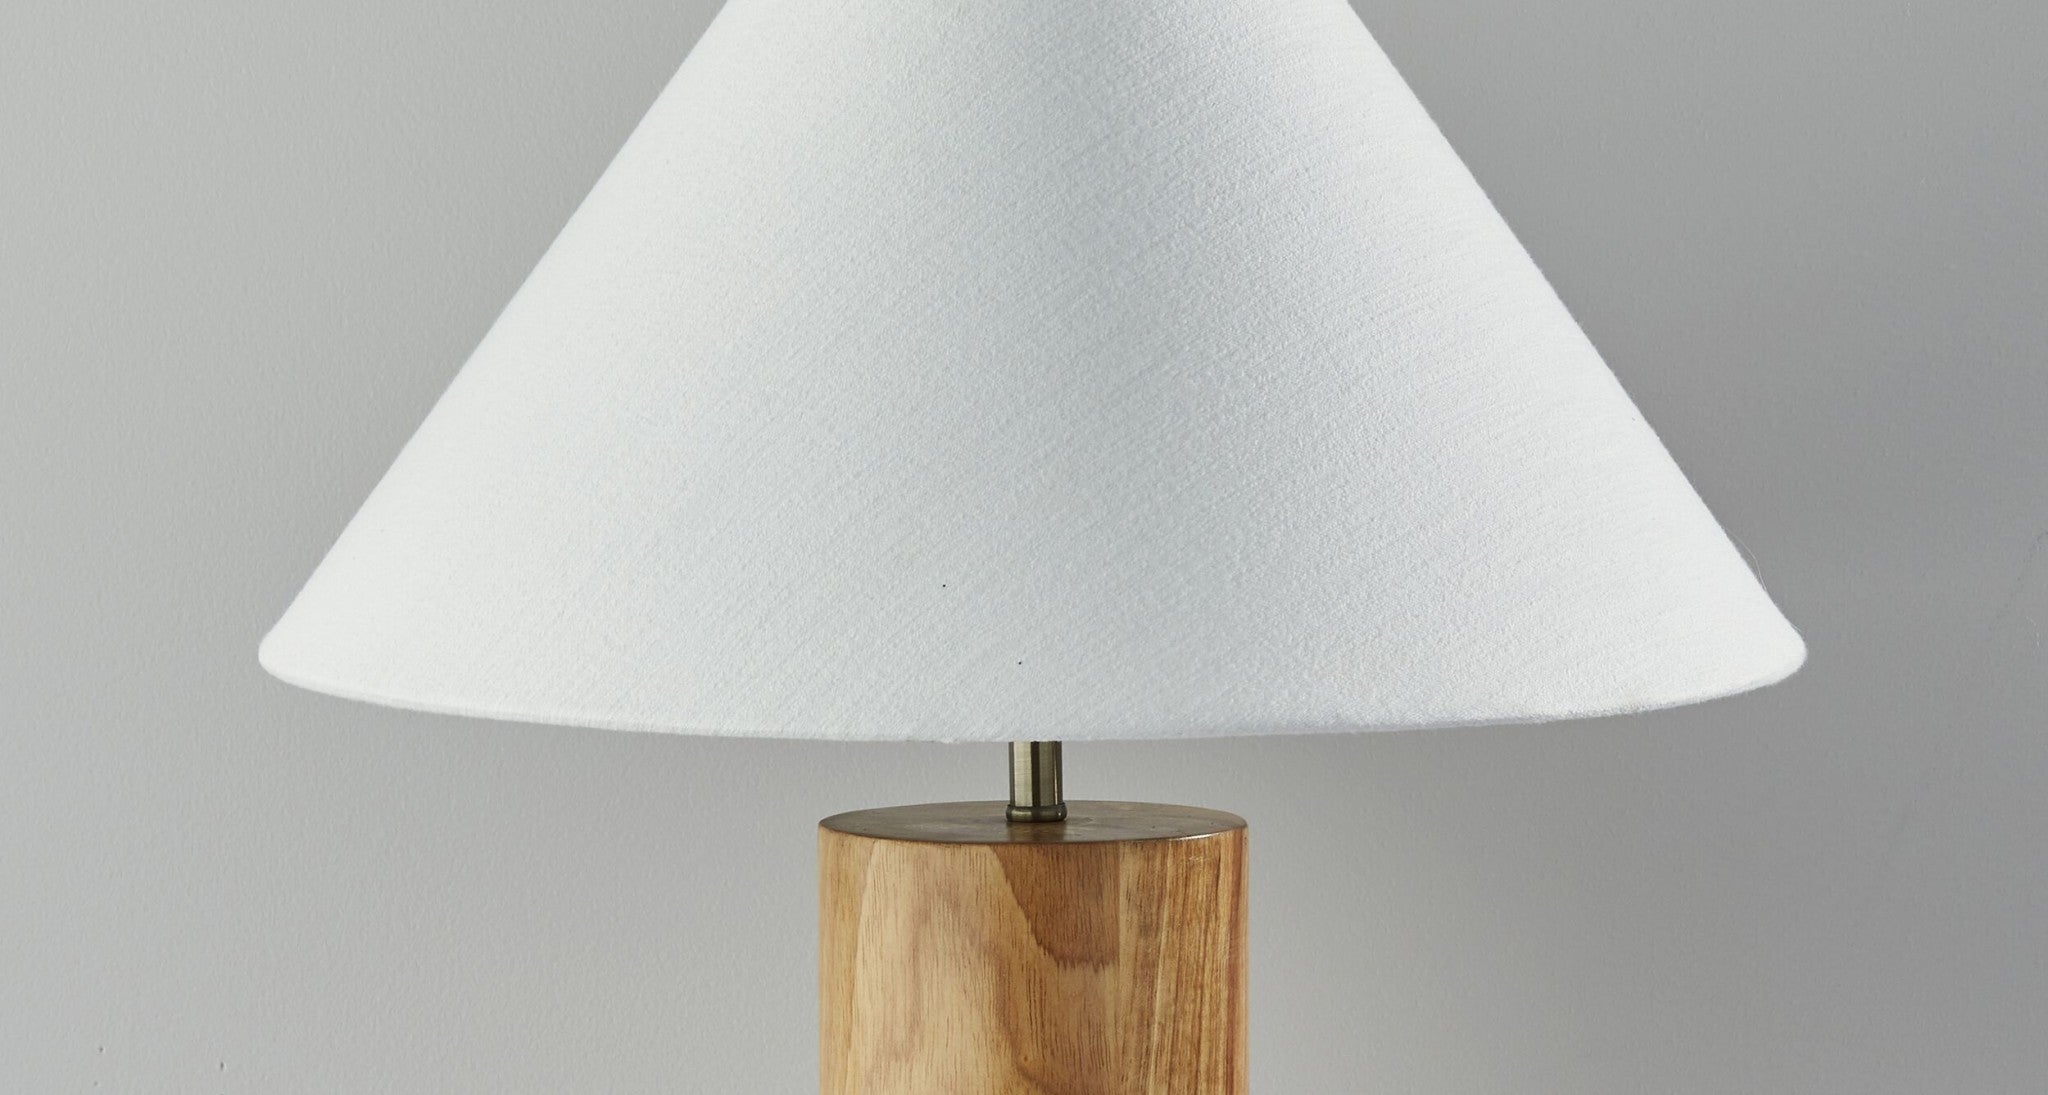 Canopy Natural Wood Block Table Lamp - Team Spirit Store USA 